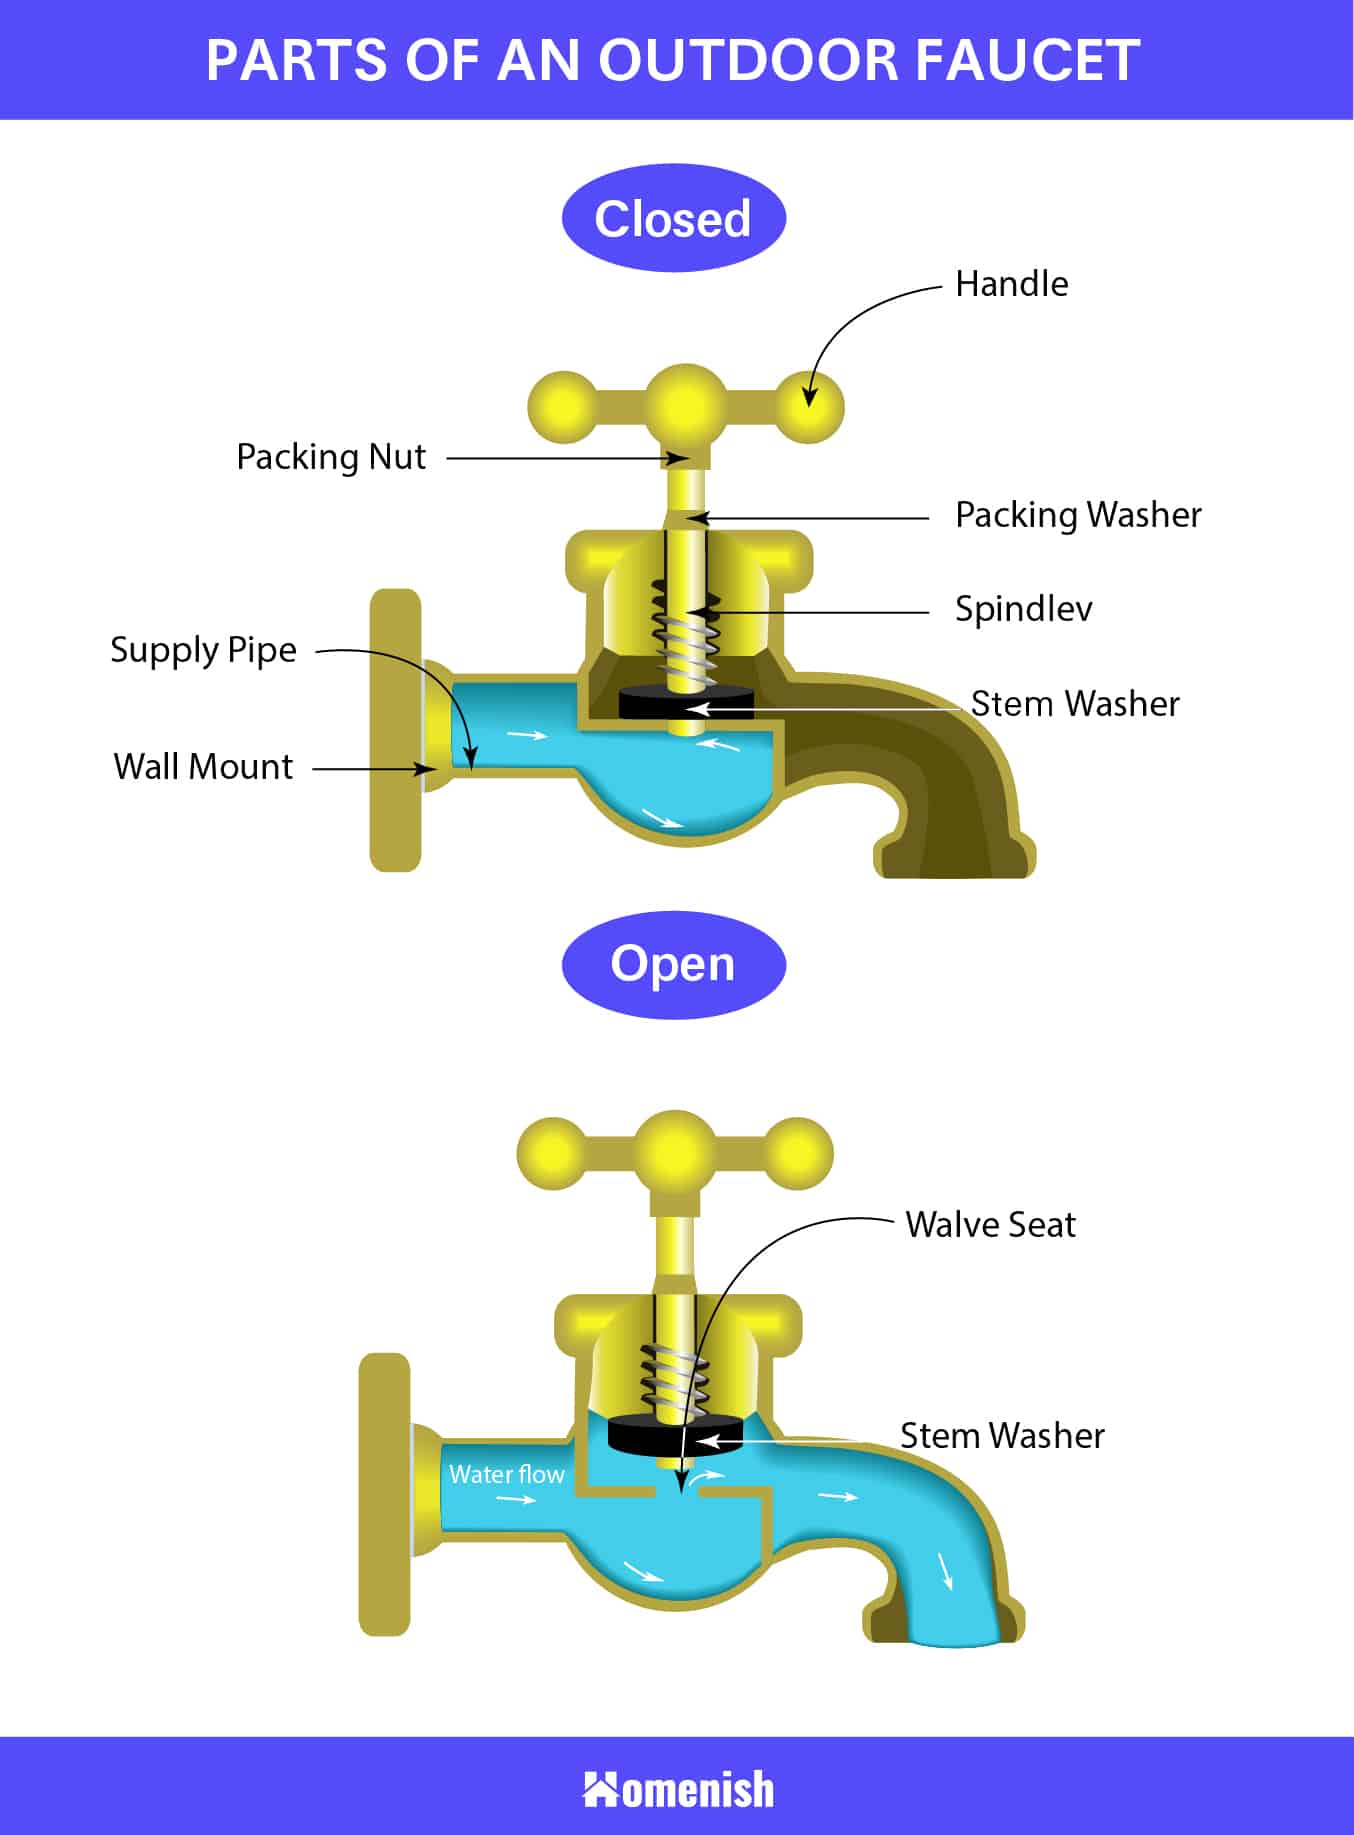 Parts of an Outdoor Faucet Diagram